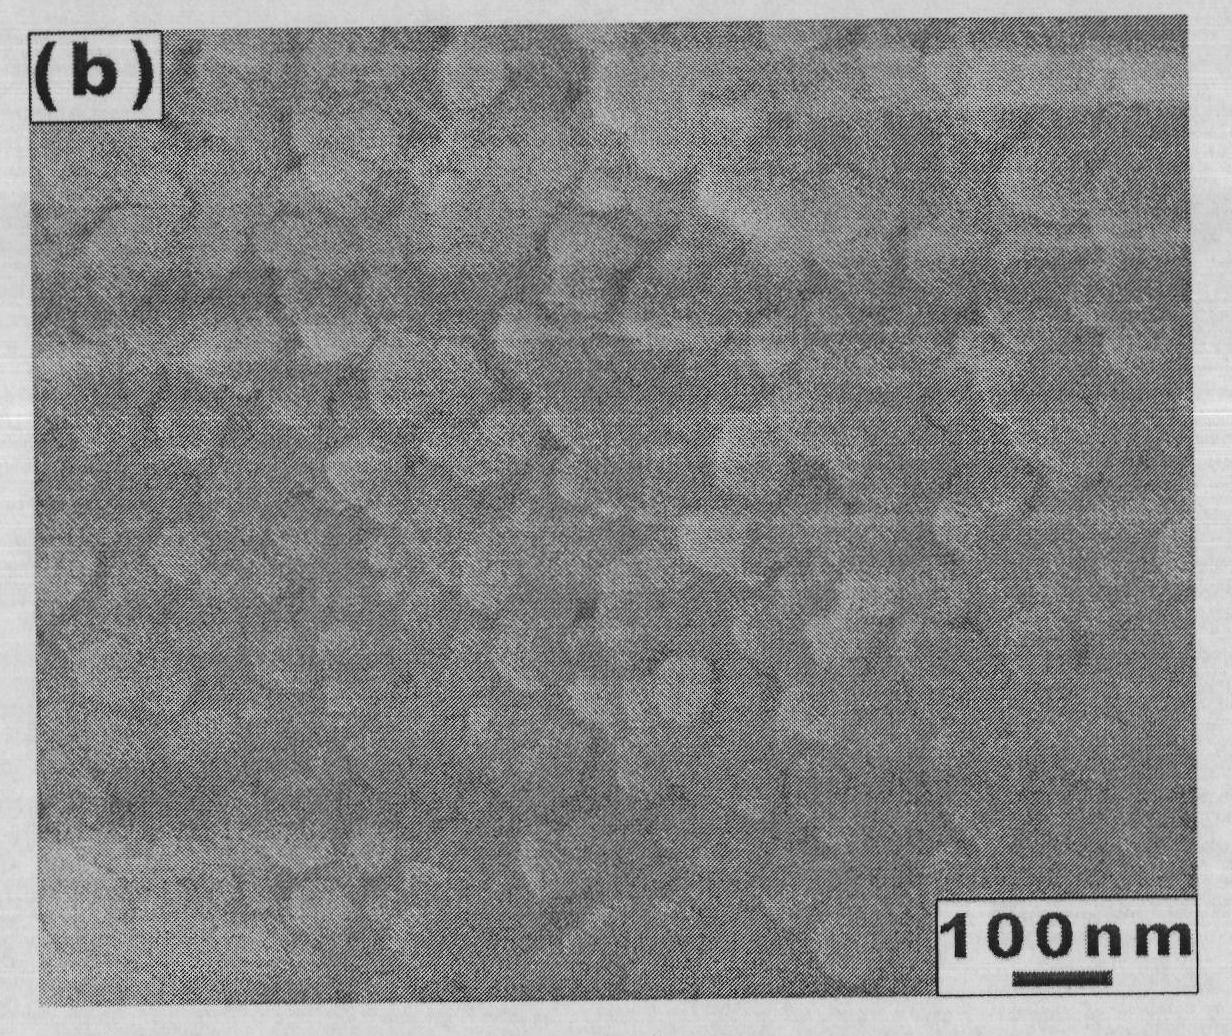 Method for preparing nano barium strontium titanate powder by adopting sol-gel method